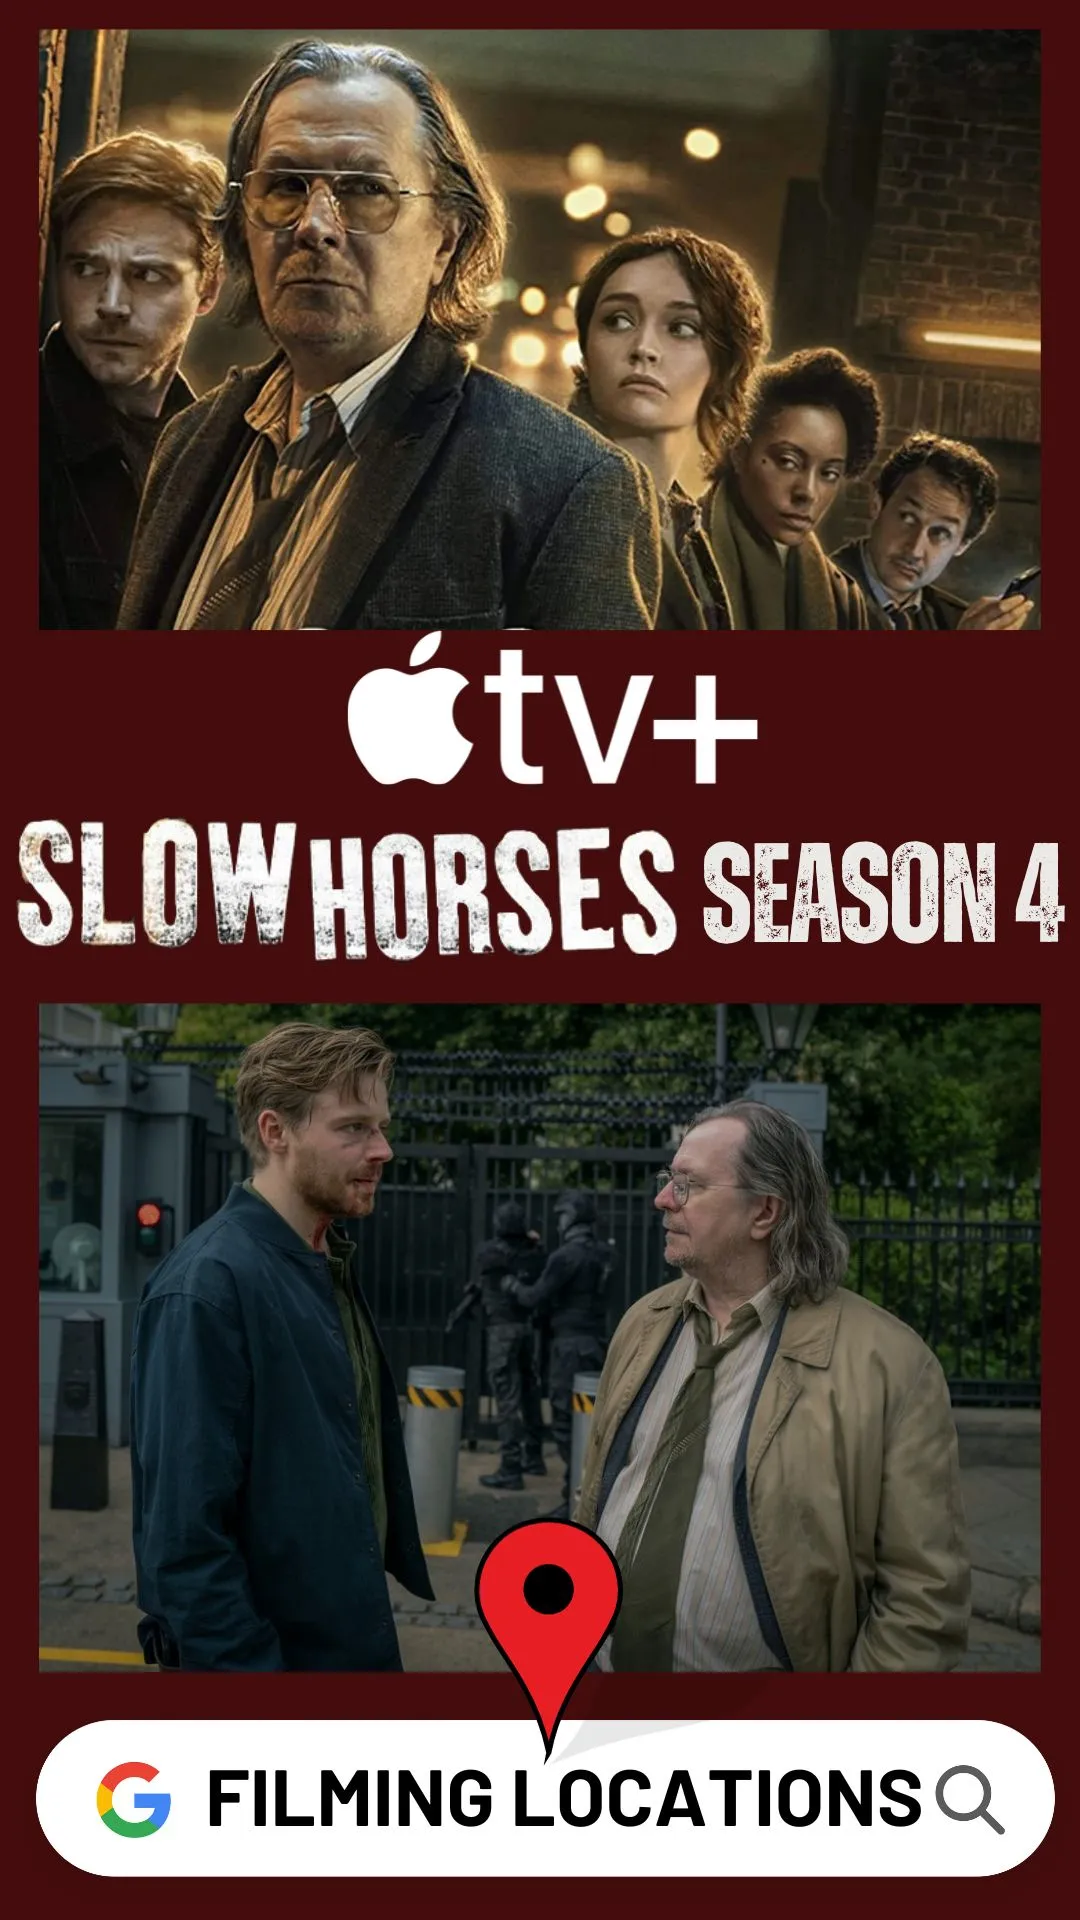 Slow Horses Season 4 Filming Locations